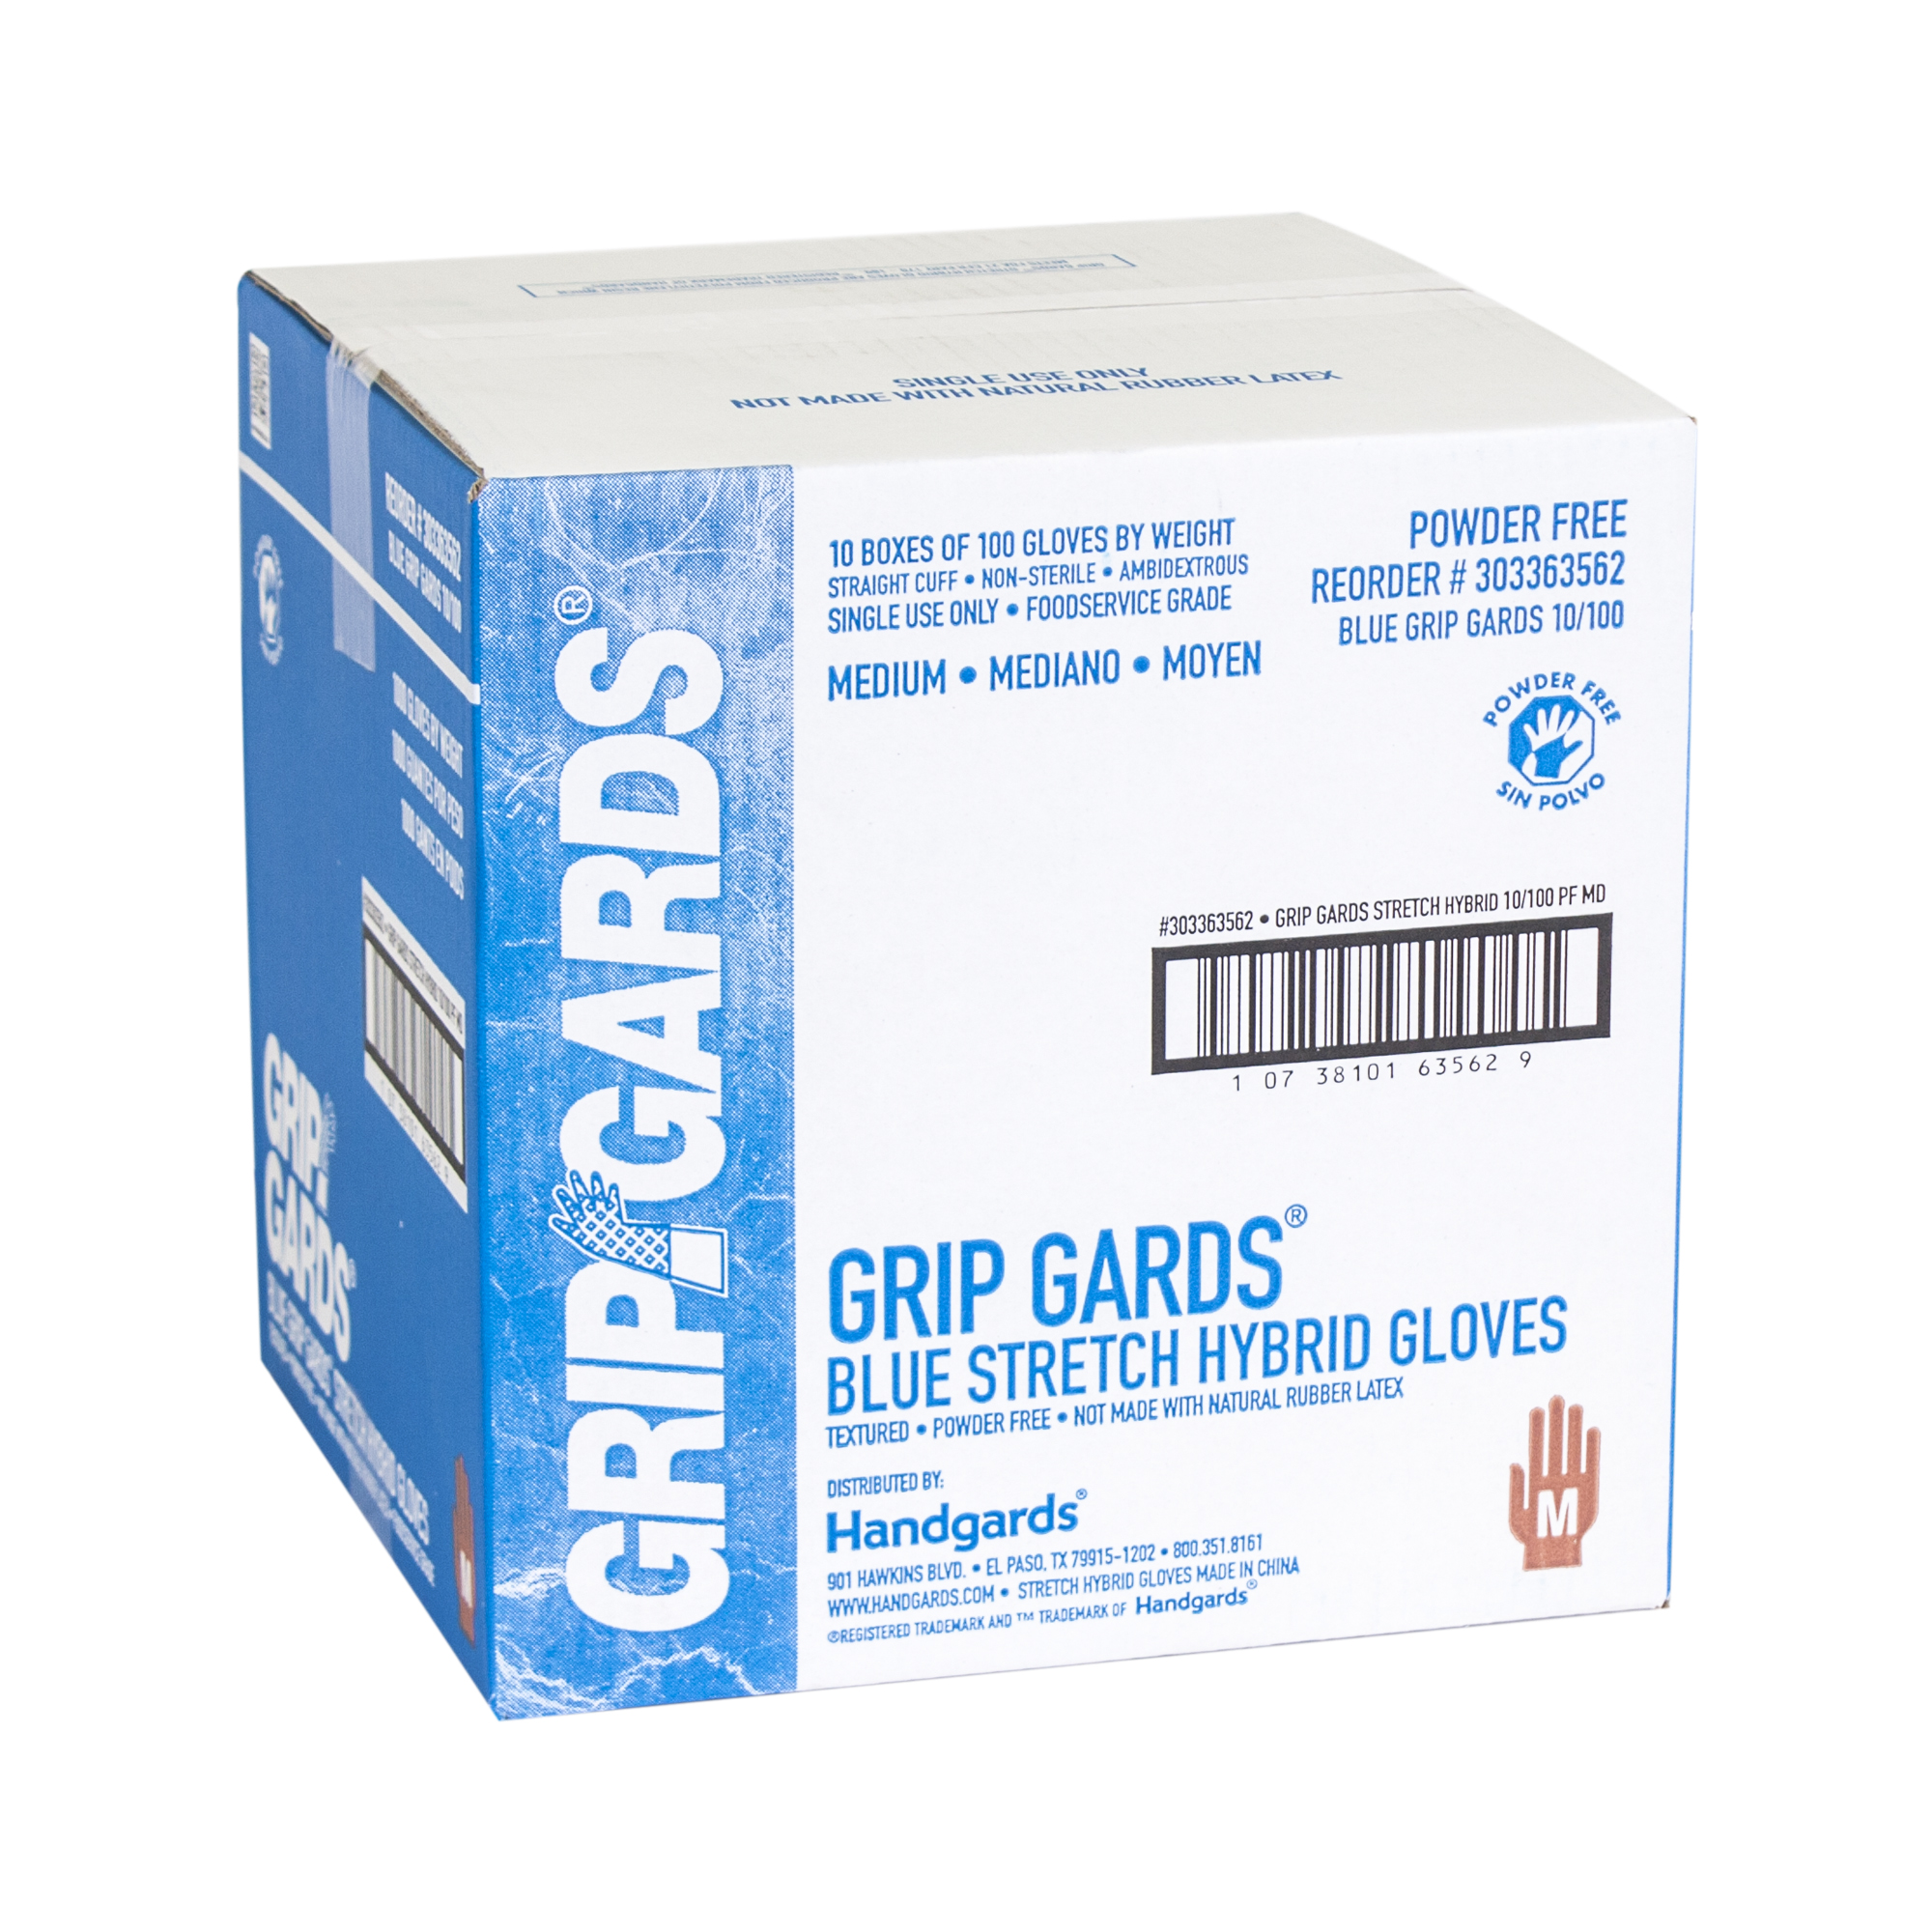 GRX | IND301 Exagrip Blue Latex Gloves - Large, Grey - Floor & Decor